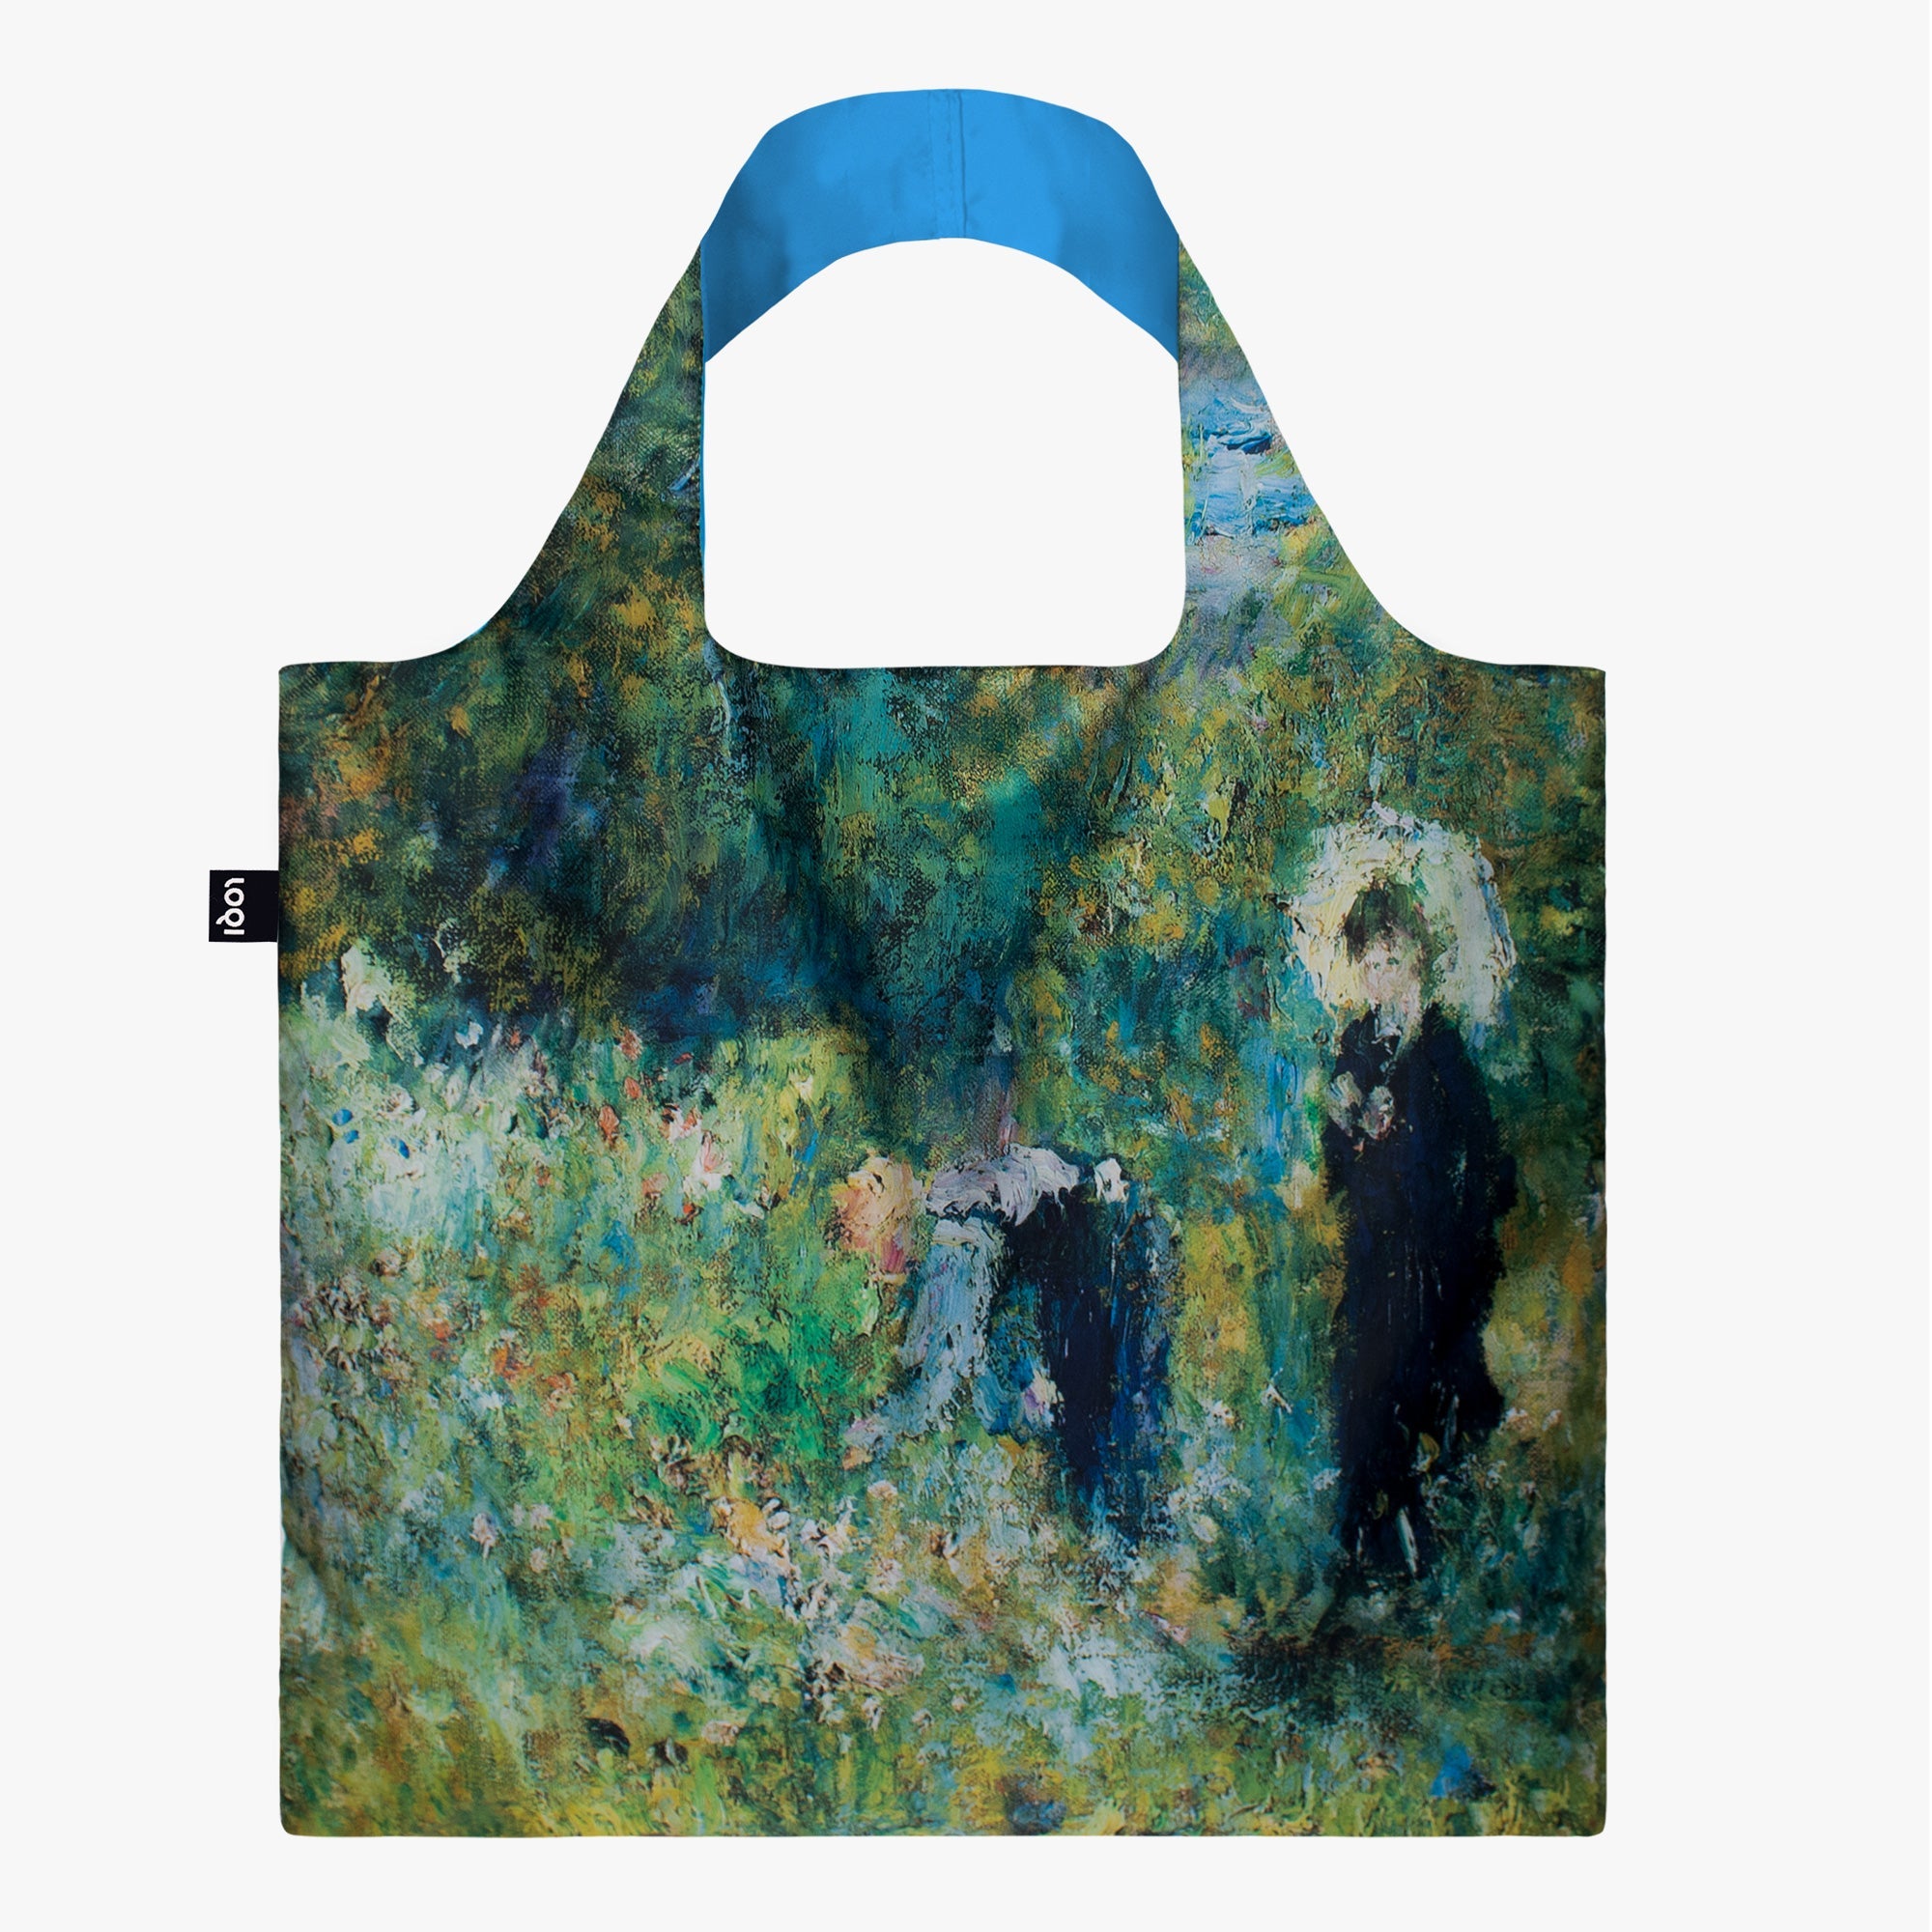 LOQI Vincent Van Gogh Recycled Bag